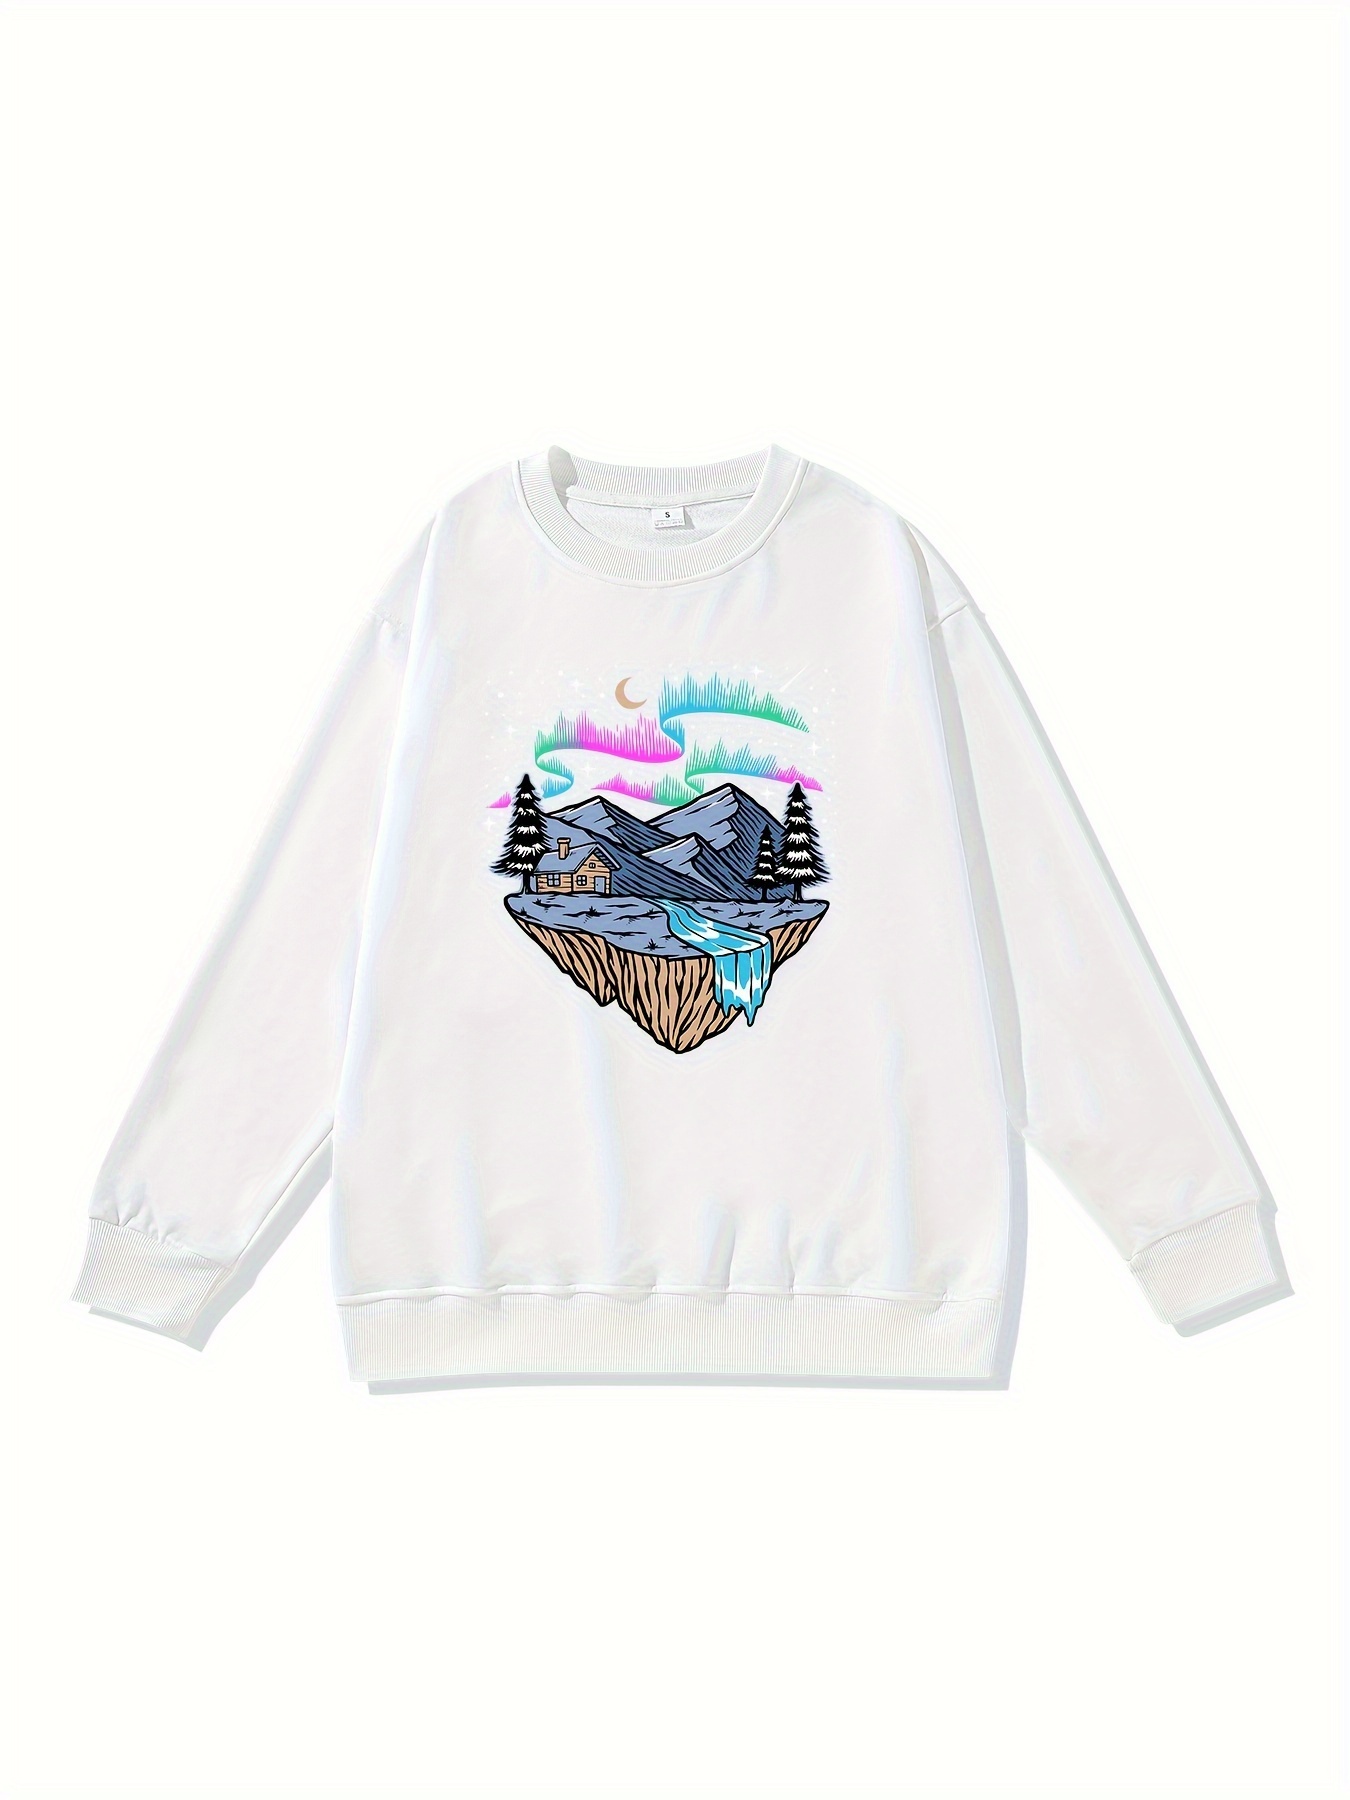 Snow Mountain Print, Men's Trendy Comfy Sweatshirt, Casual